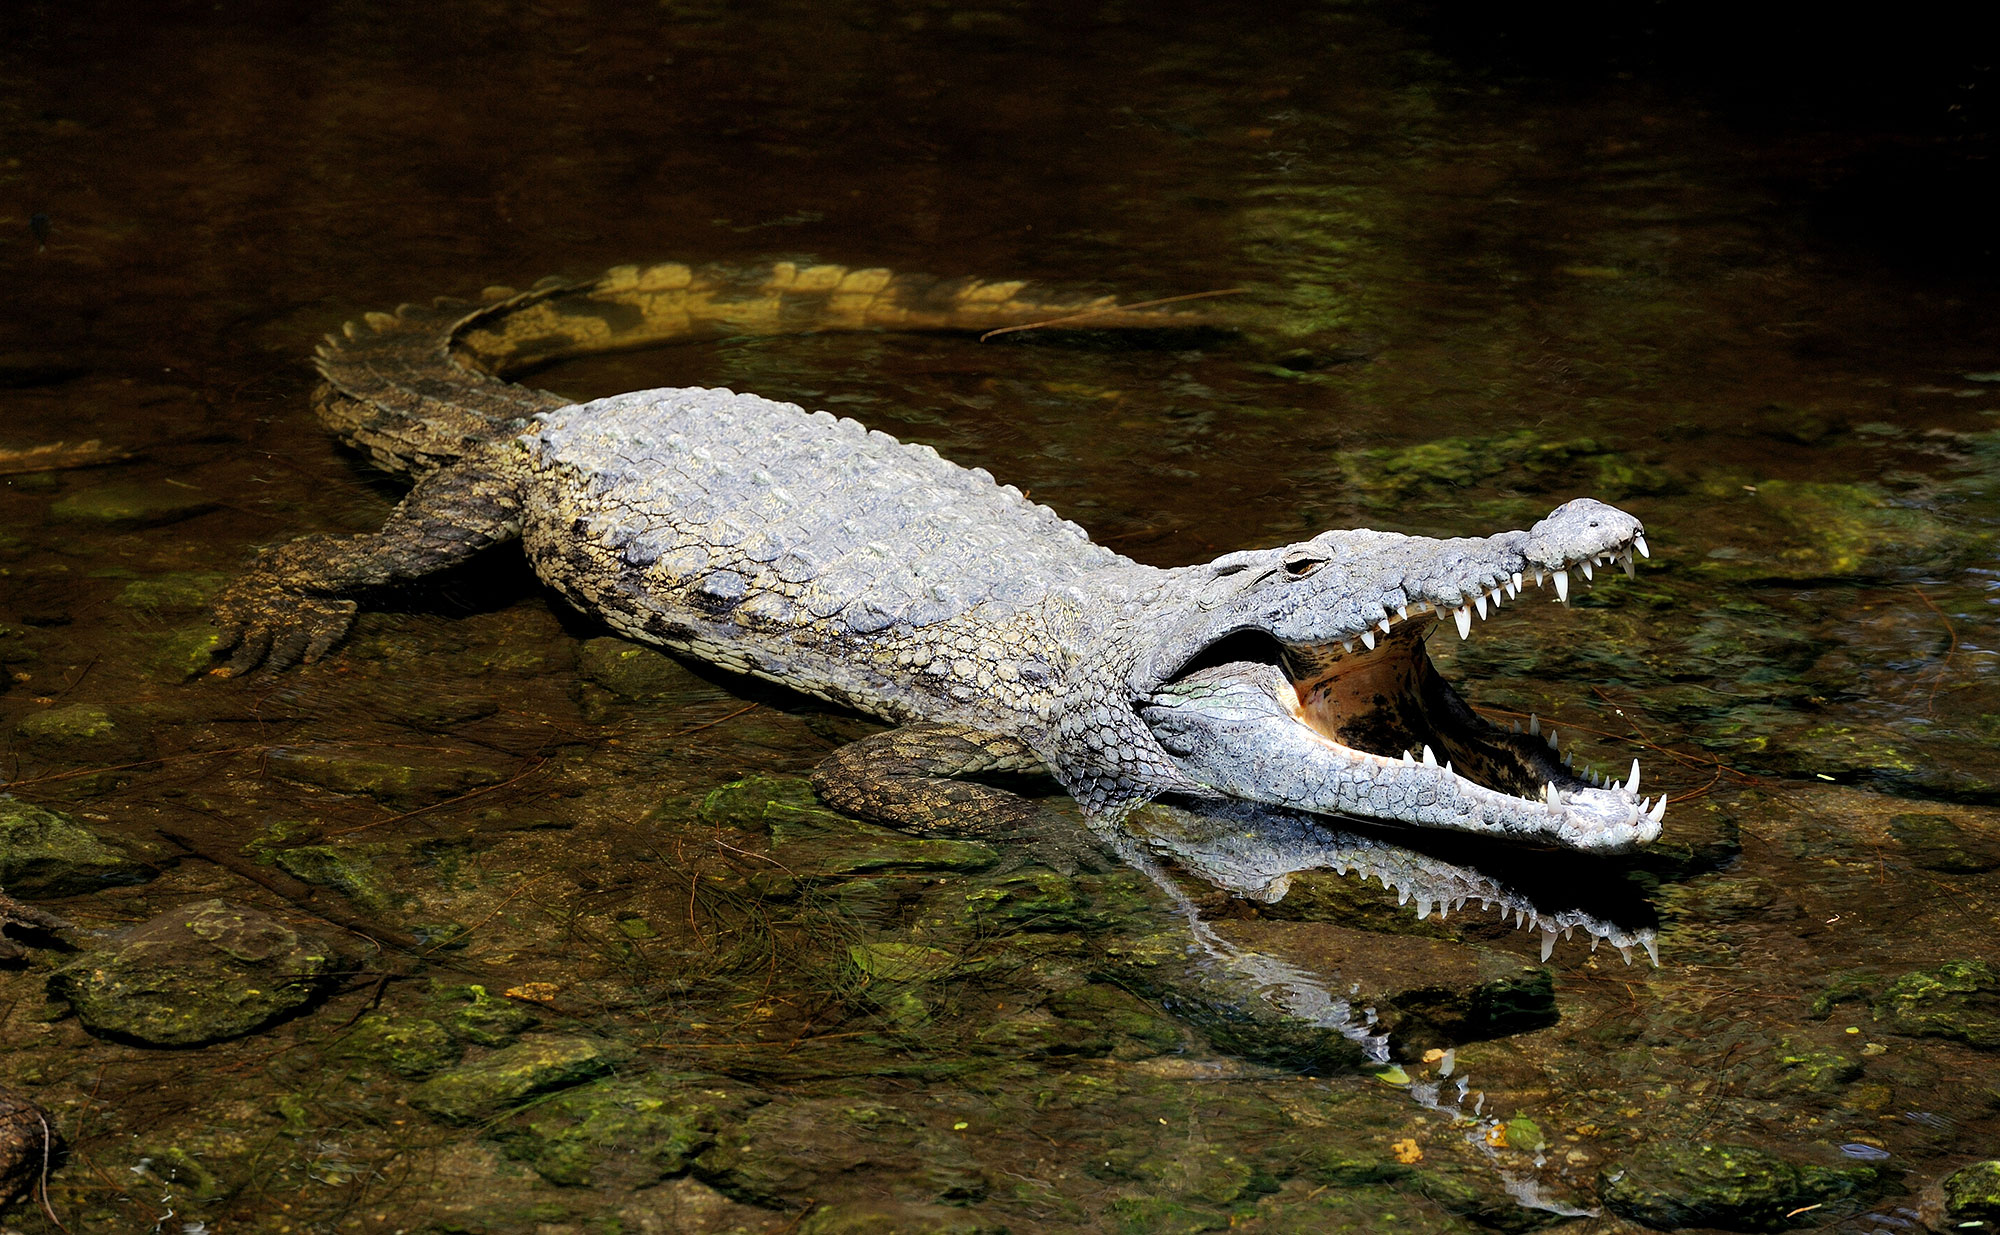 saltwater crocodile boots